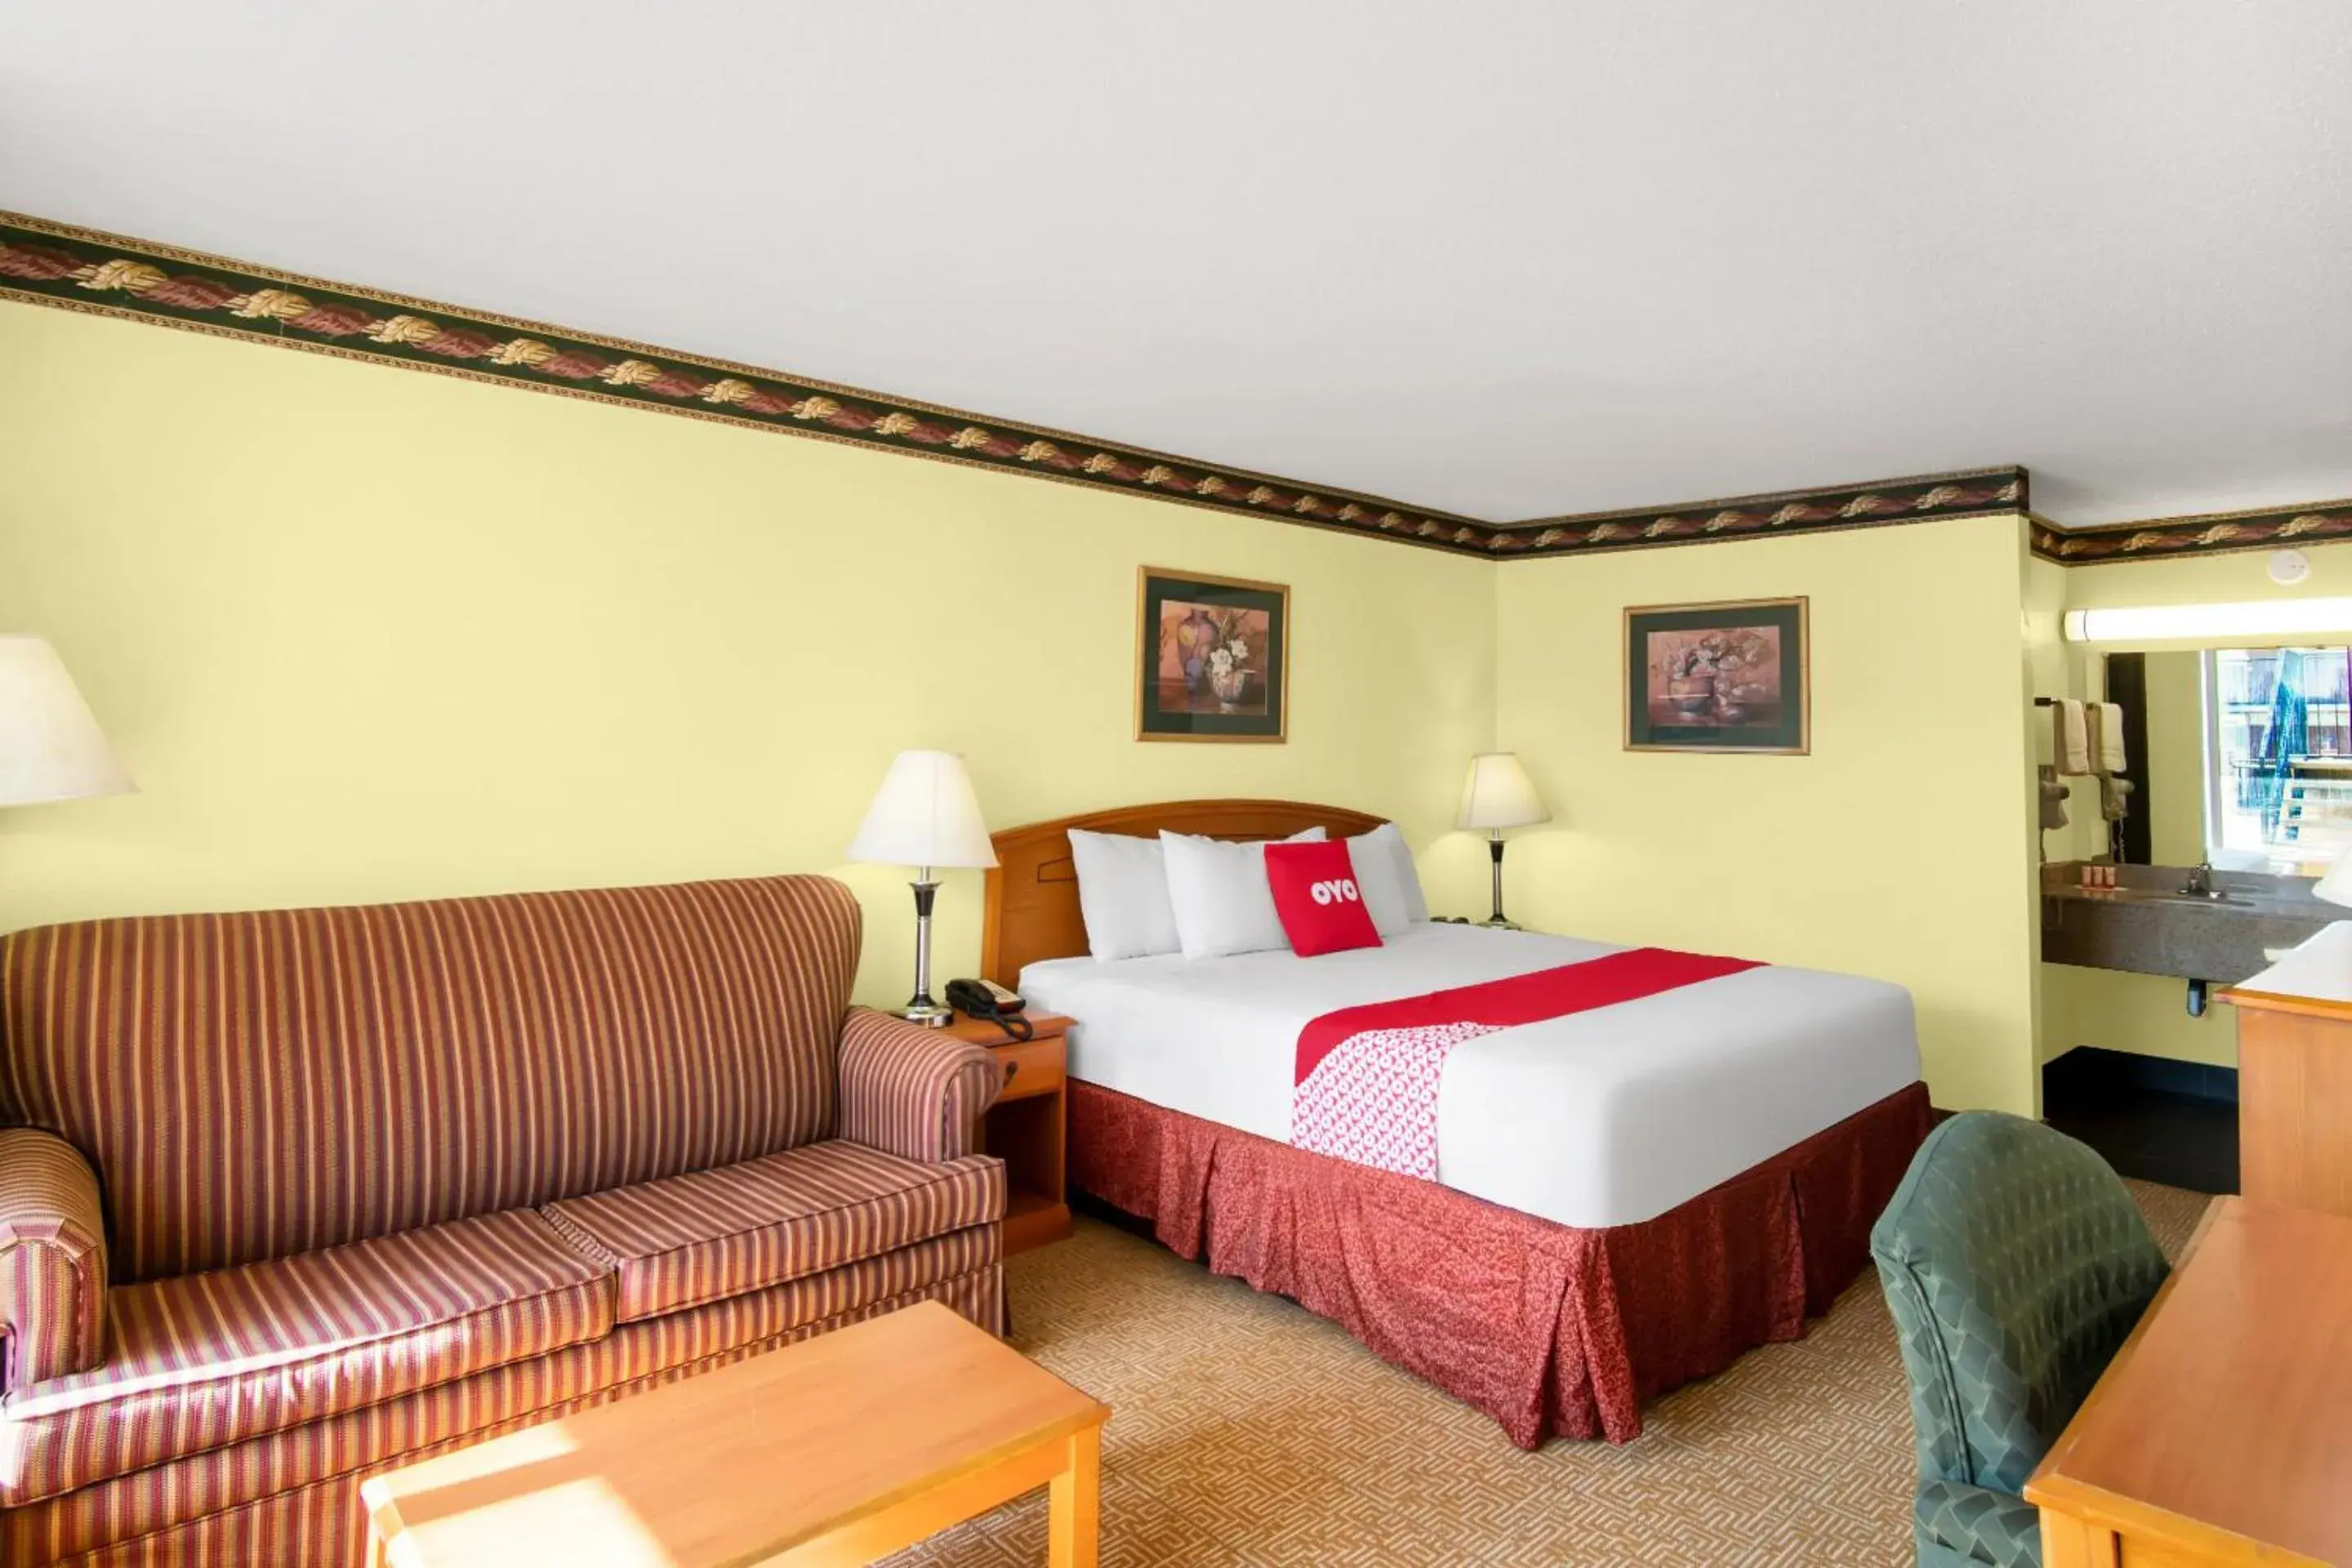 Bedroom, Room Photo in OYO Hotel Oklahoma City South I-35 and SE 29th